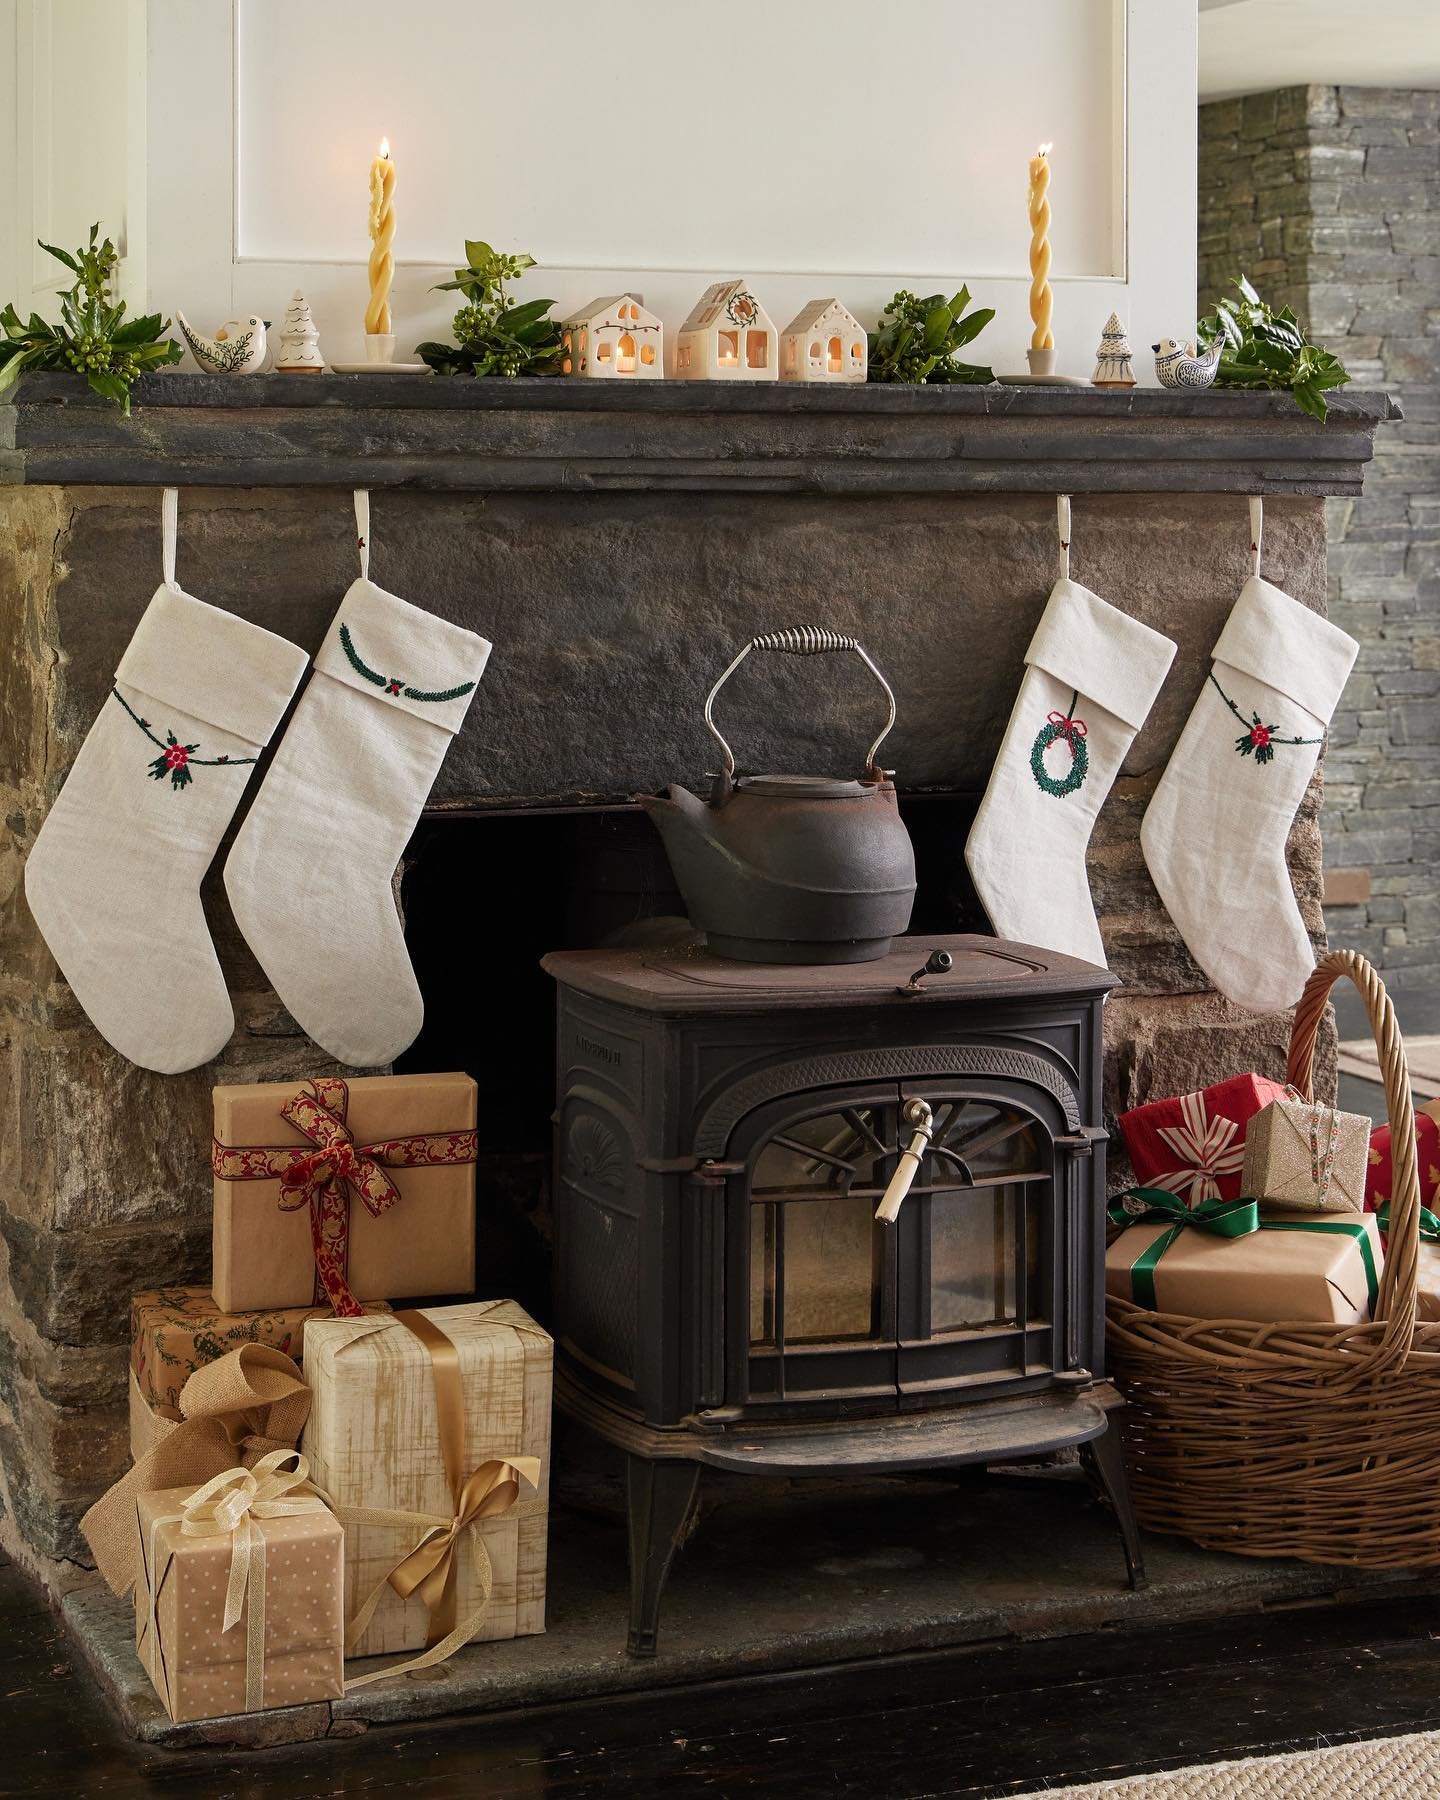 Stockings are hung! @craftspring 🎅🏼